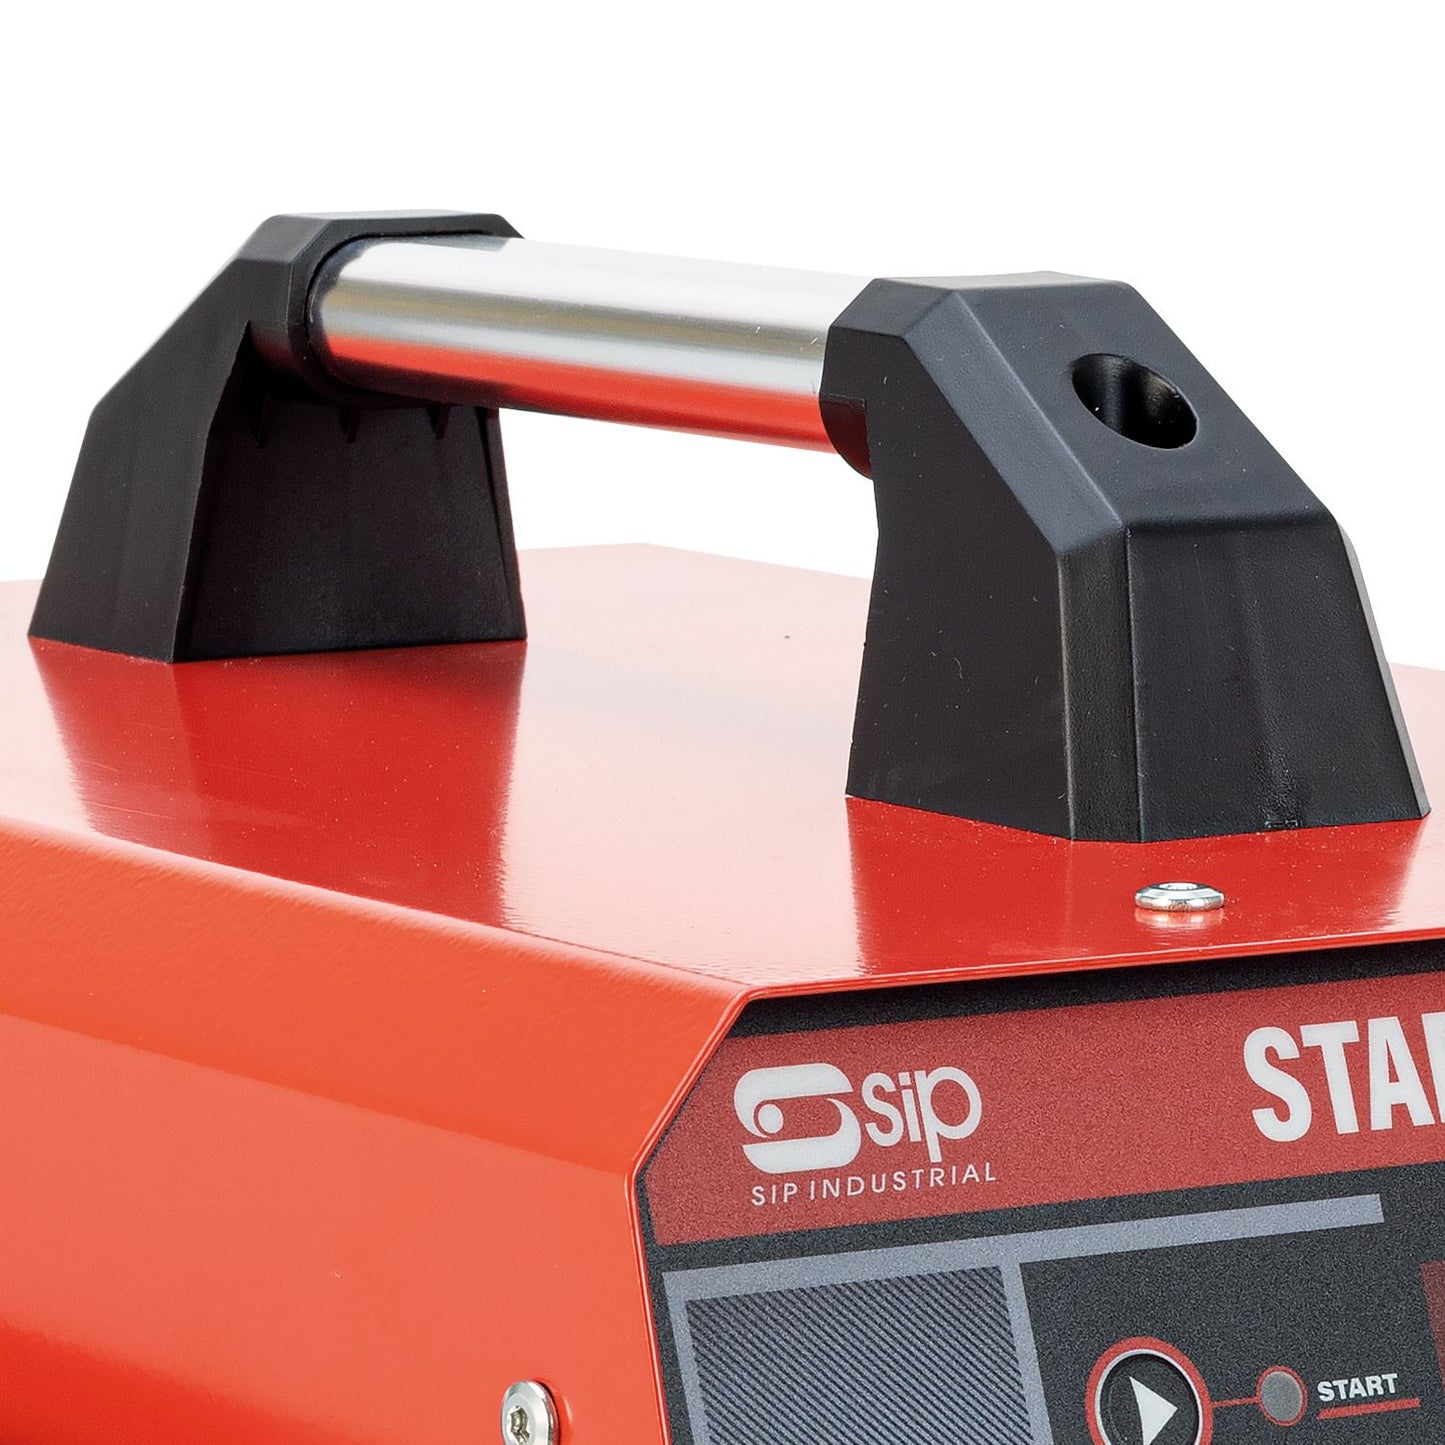 SIP Industrial STARTMASTER DSC200B Digital Starter Charger